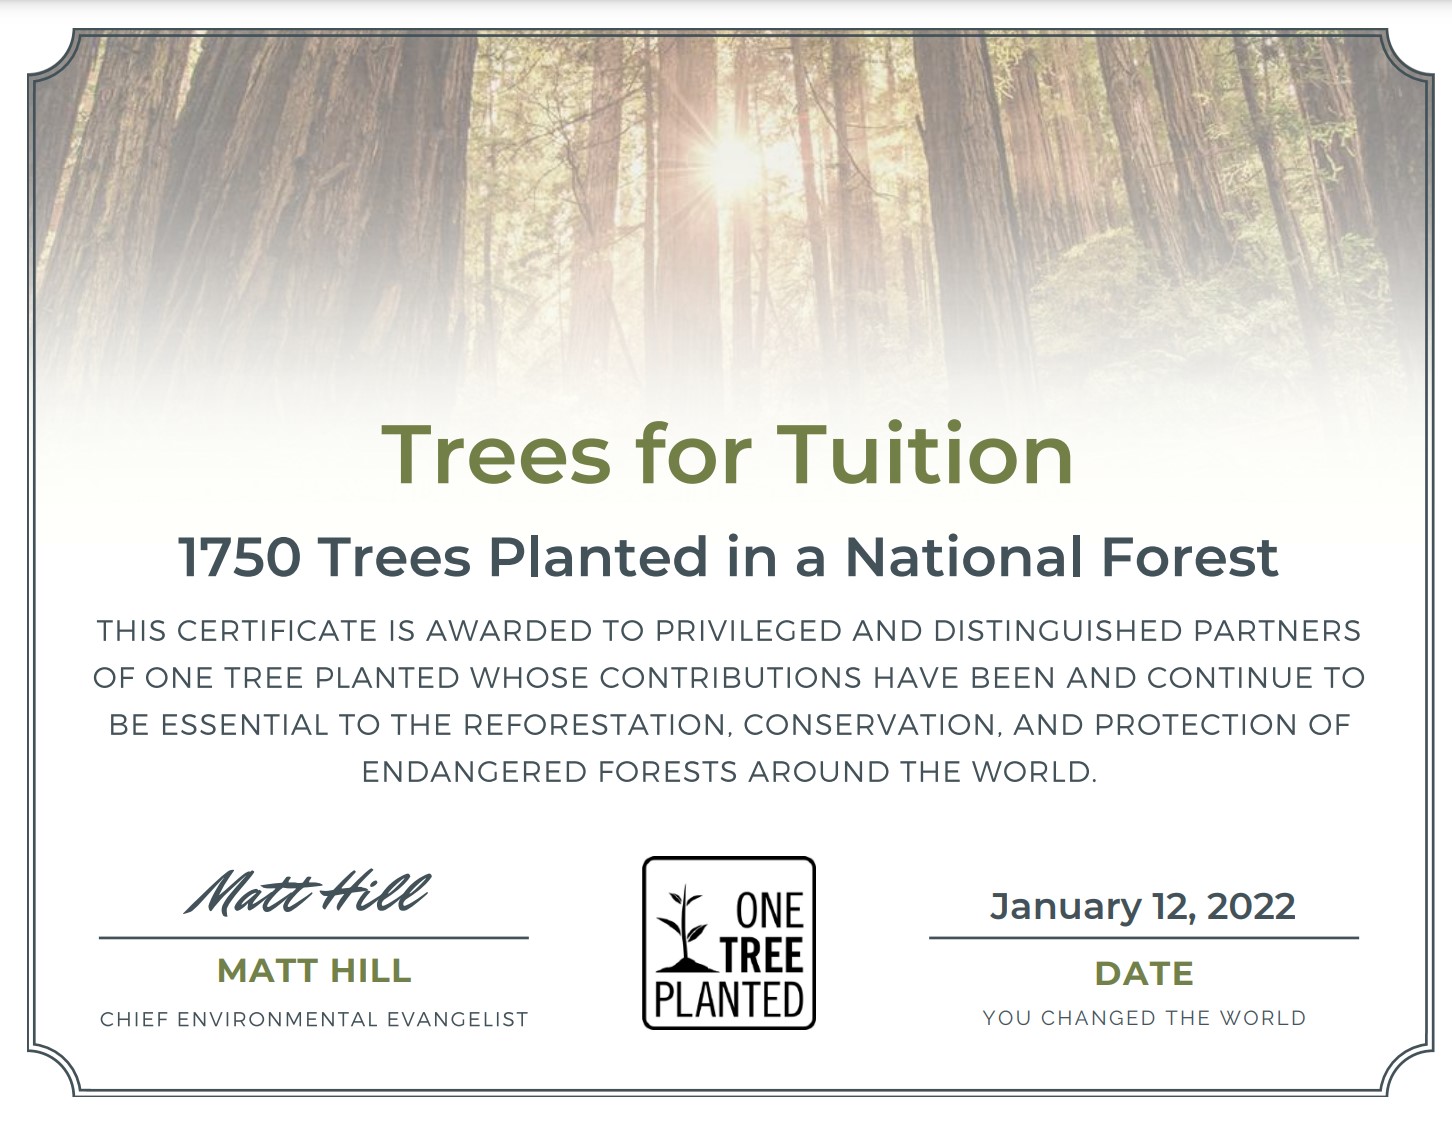 TFT planting Trees